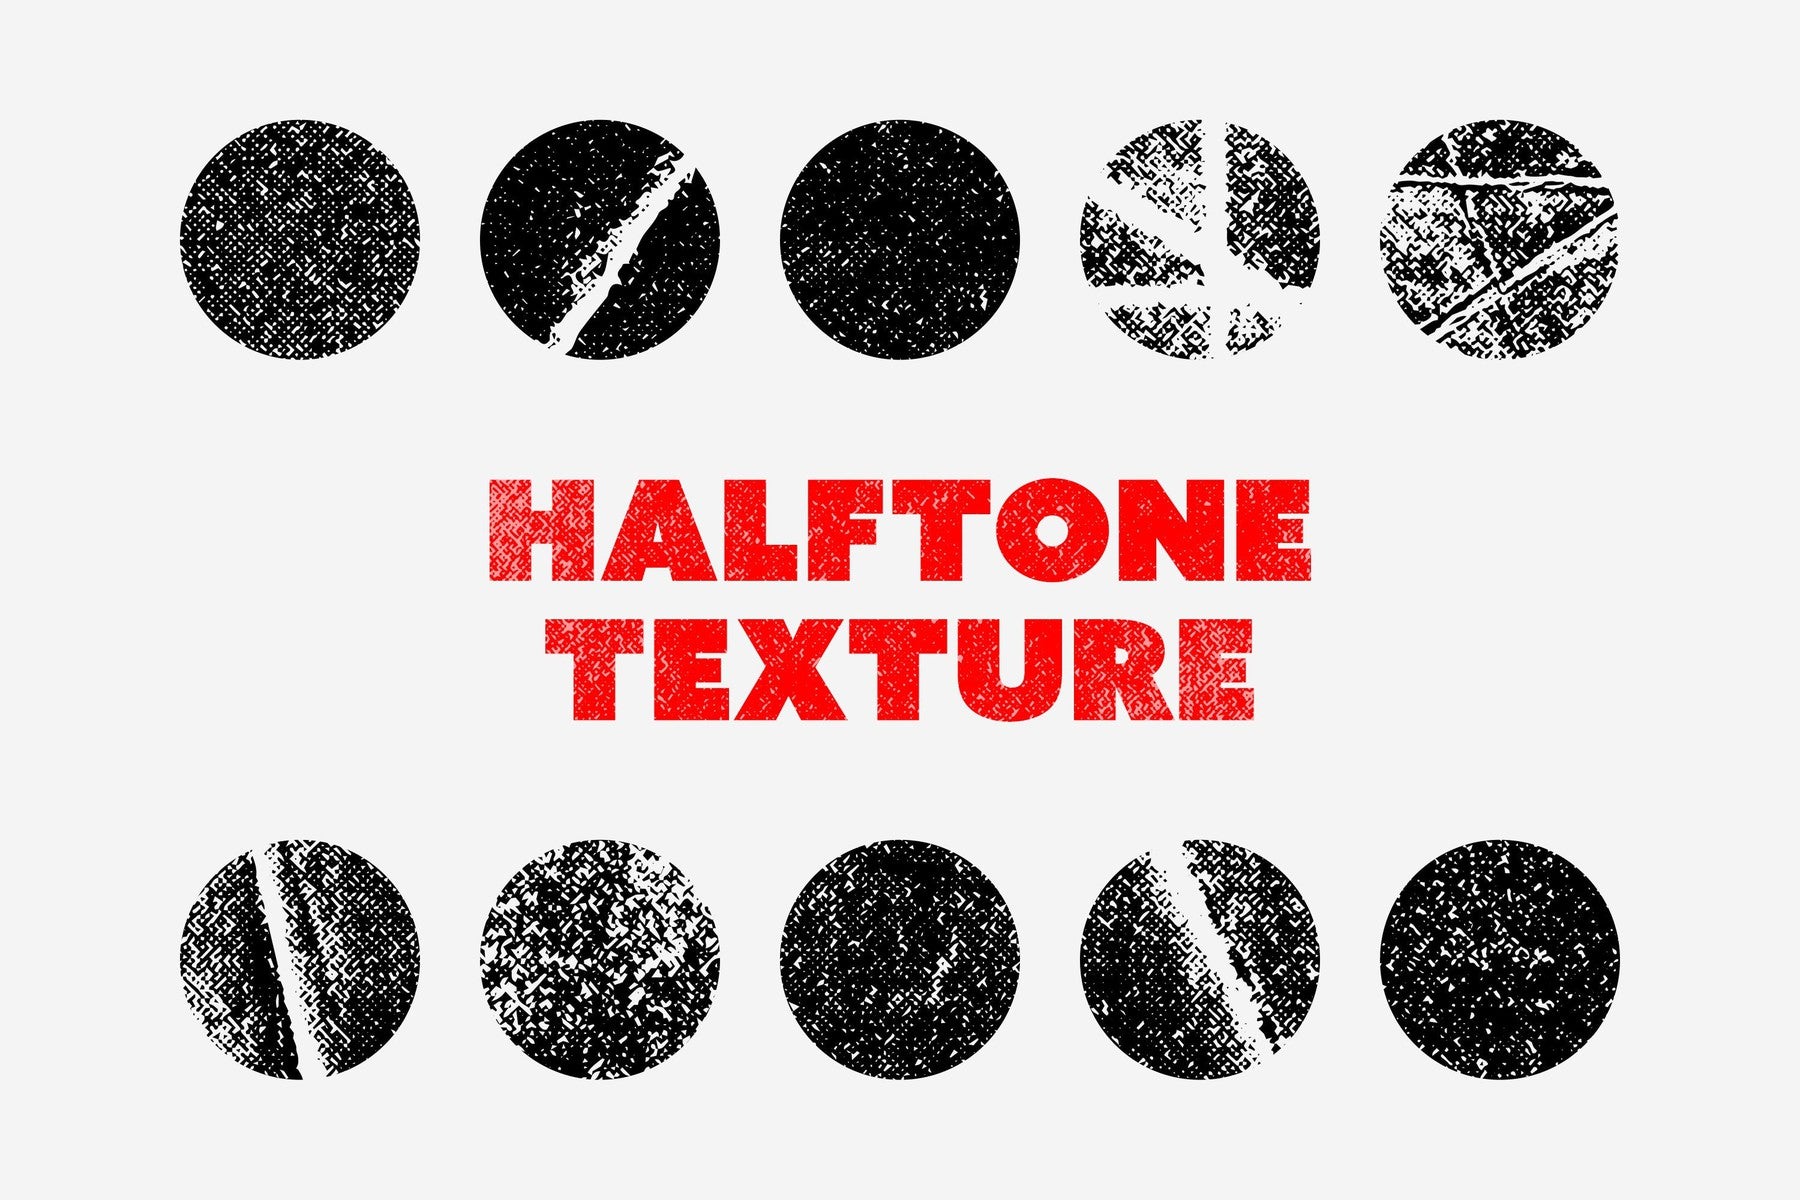 Paperman Halftone Textures